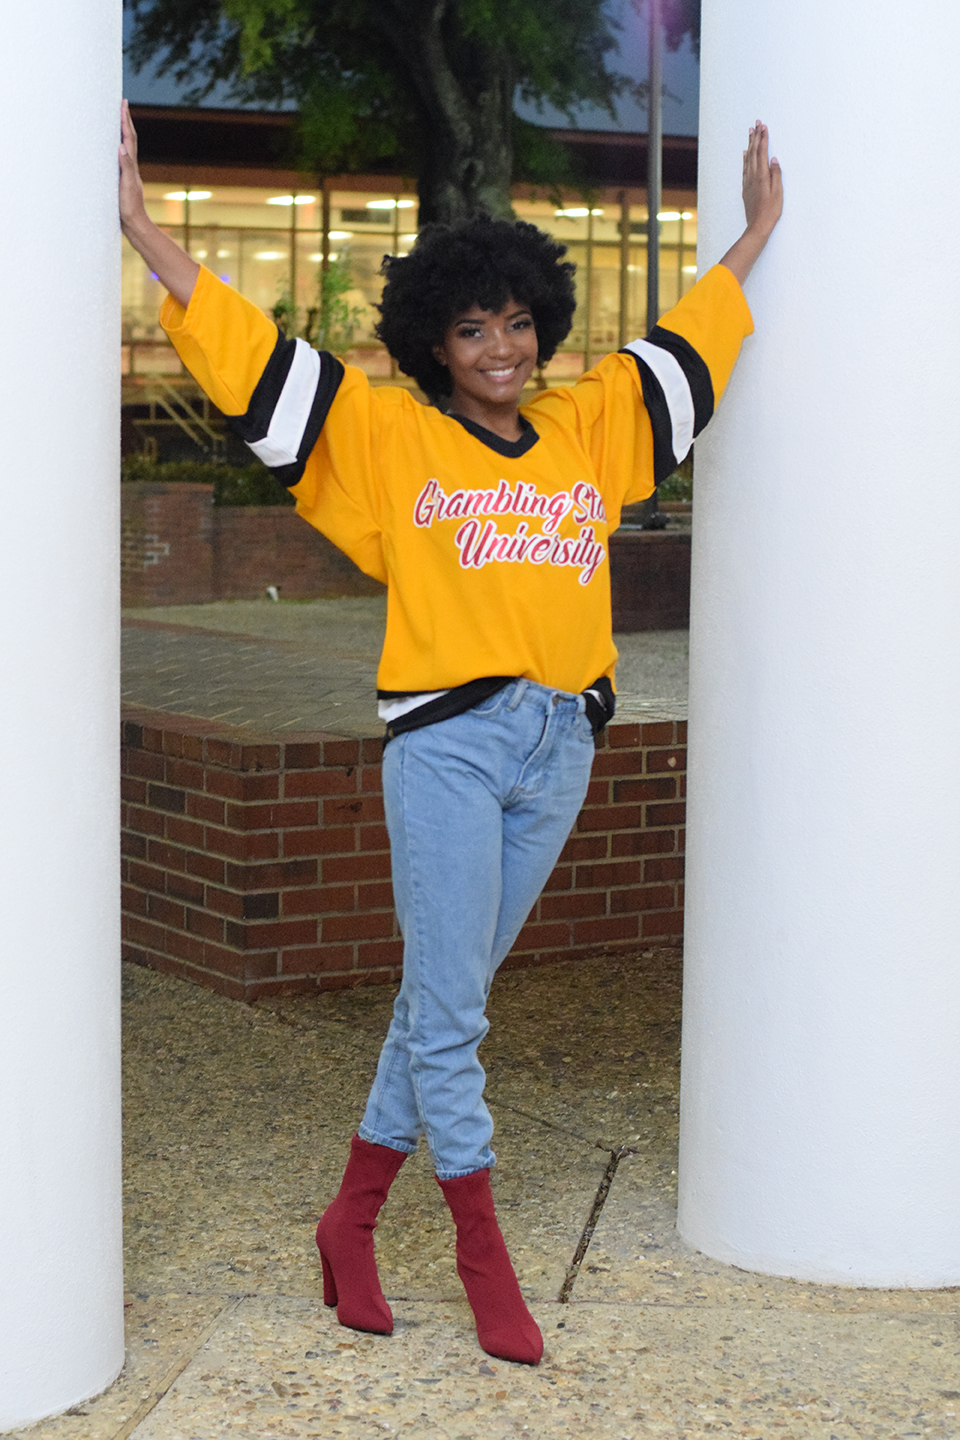 Black woman wearing university sweatshirt standing between two columns.